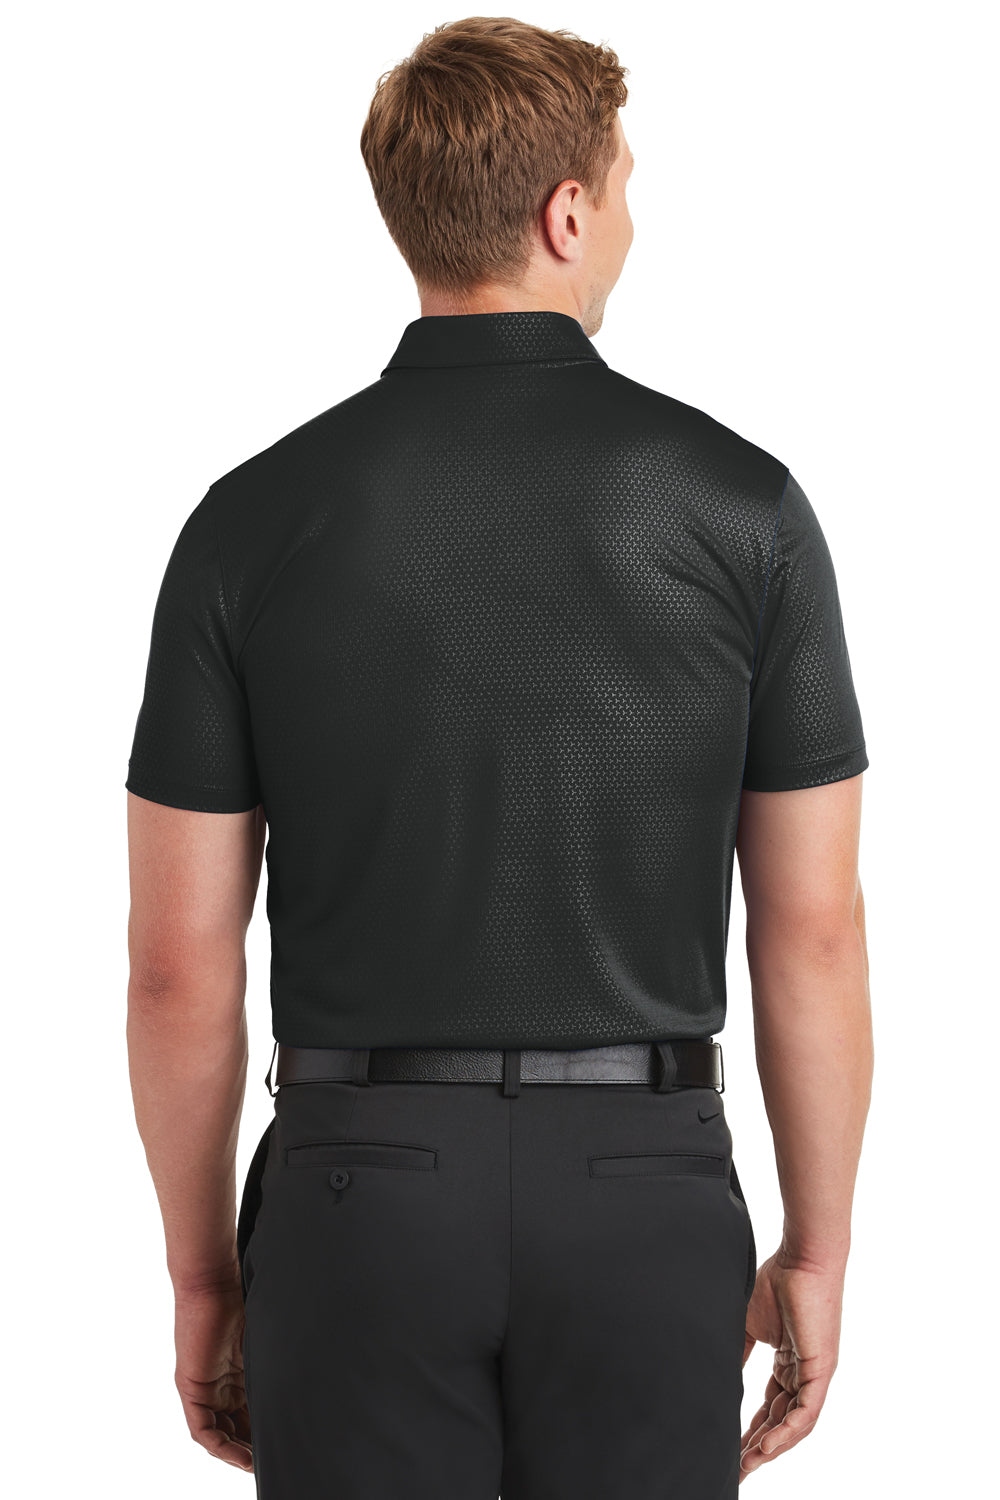 Nike 838964 Mens Dri-Fit Moisture Wicking Short Sleeve Polo Shirt Black Model Back